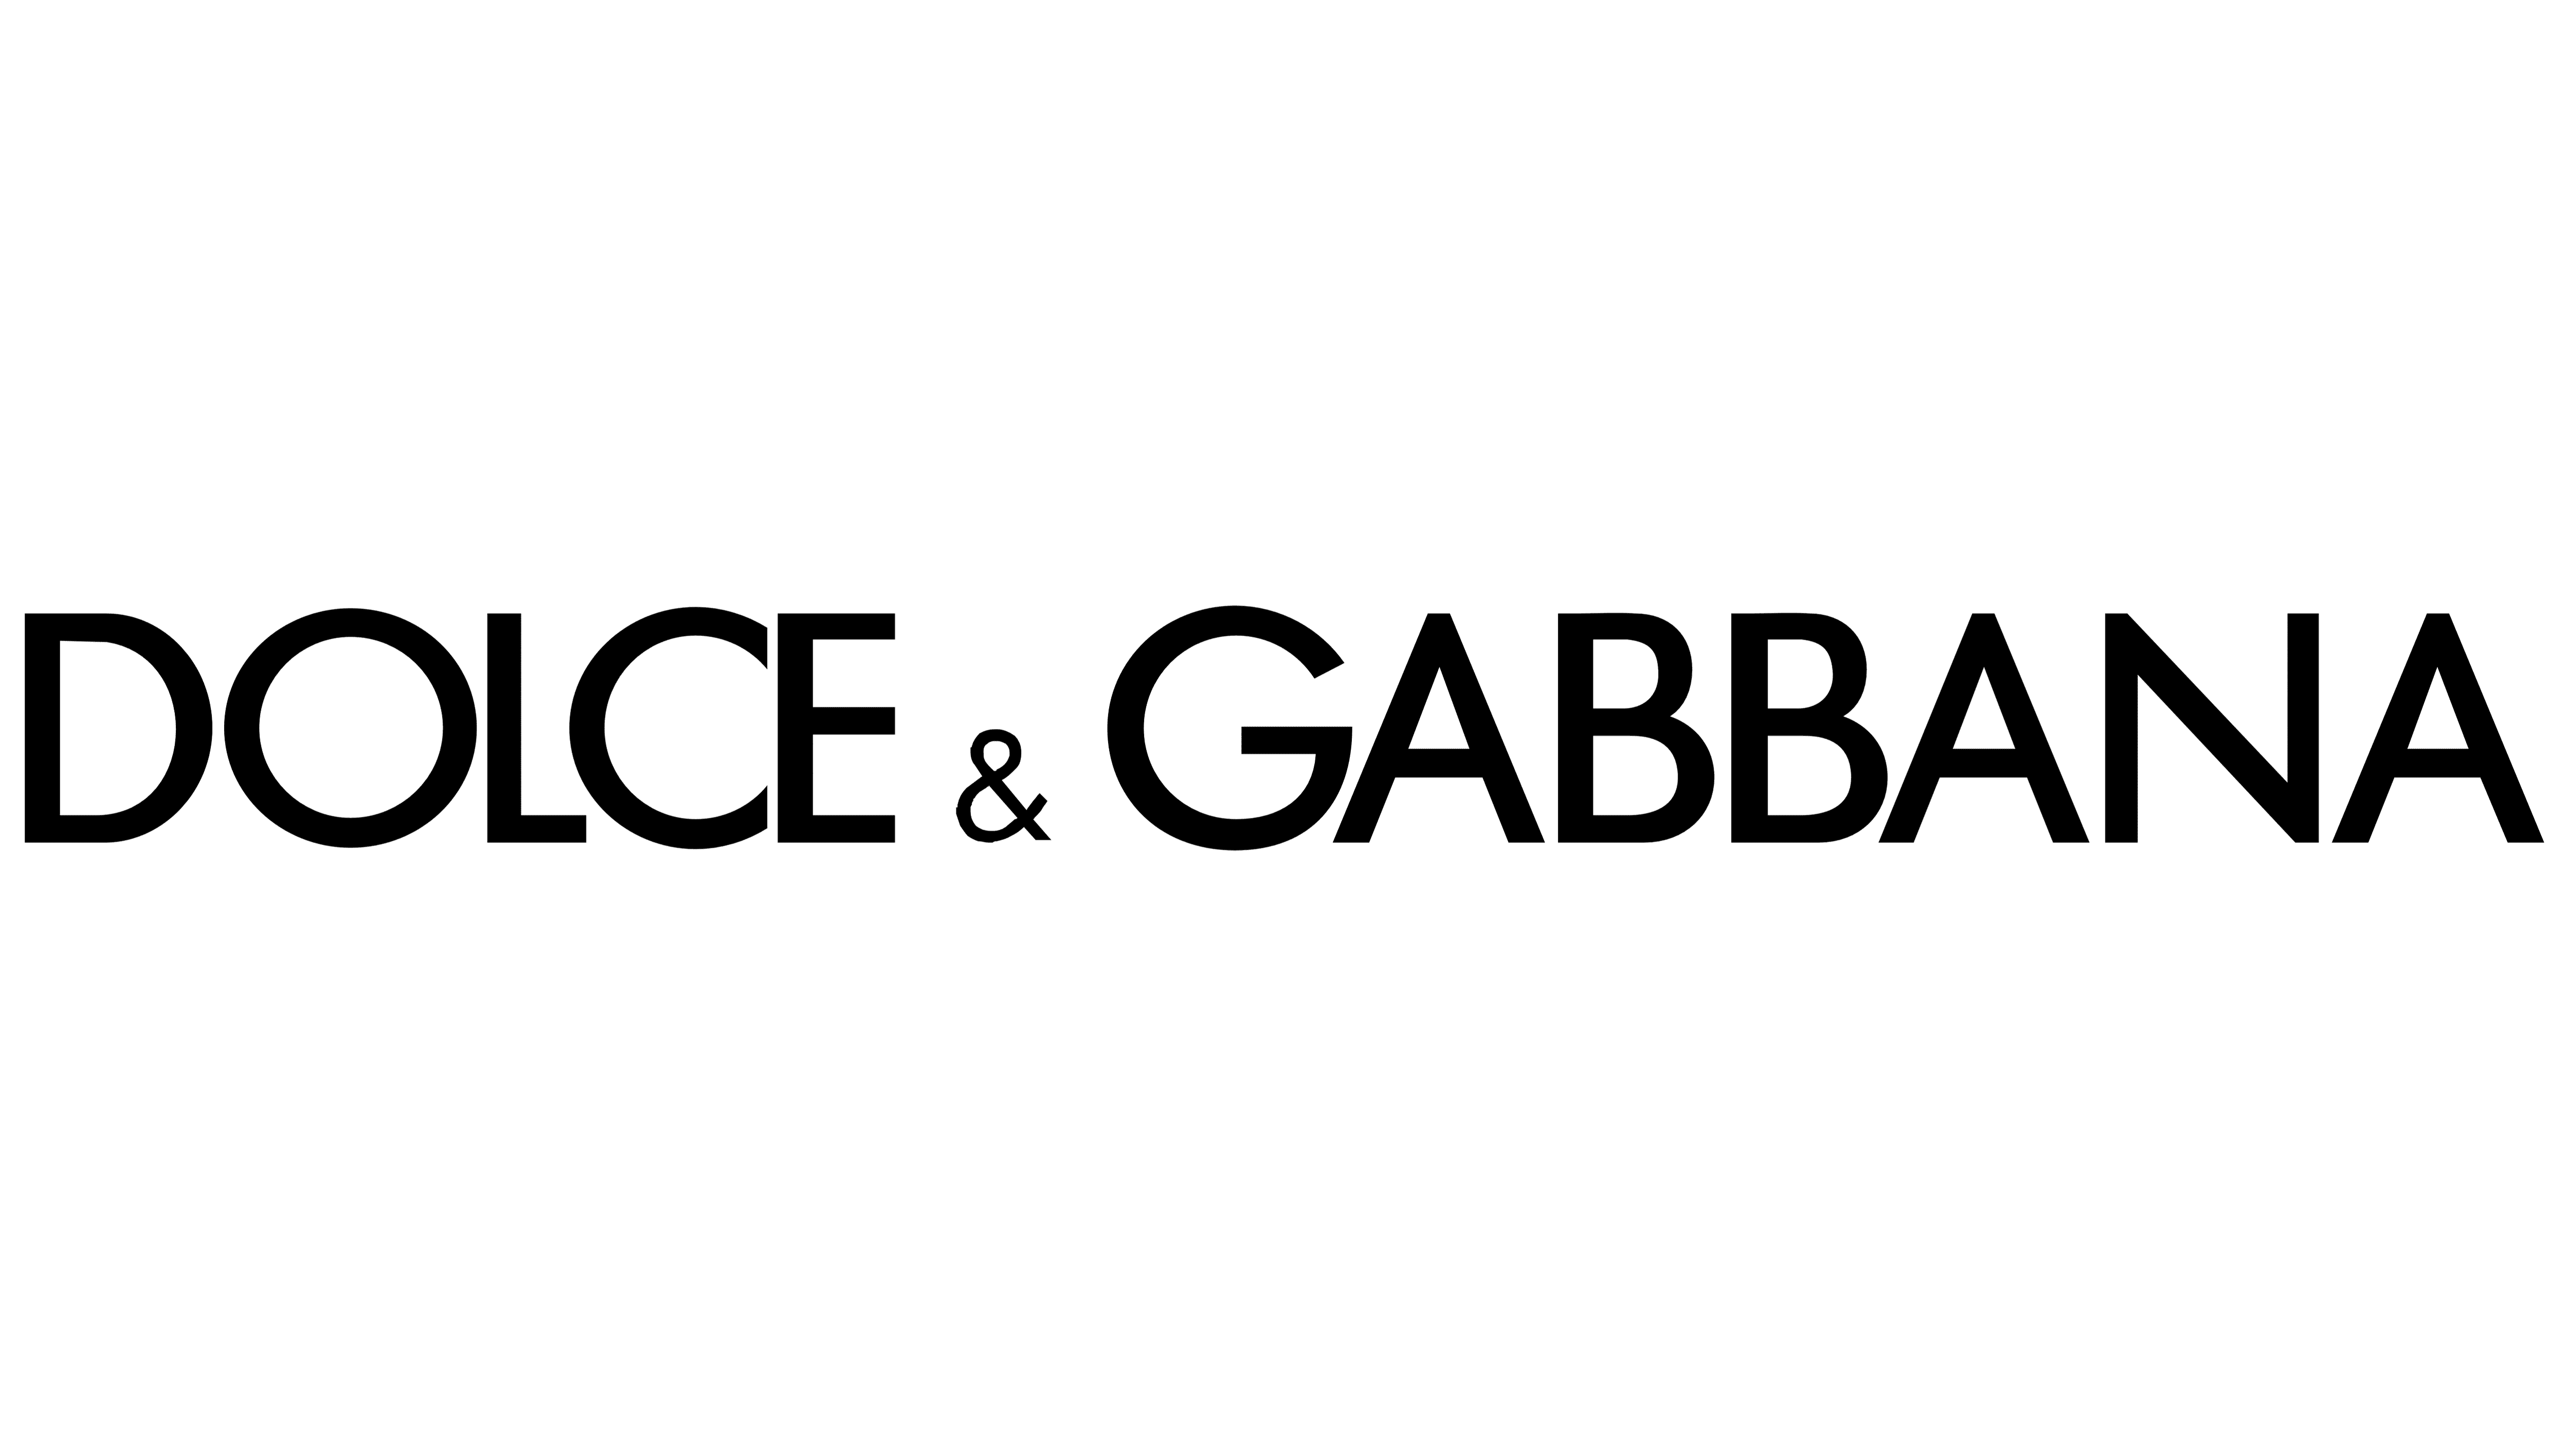 Man Made Dolce & Gabbana 4k Ultra HD Wallpaper